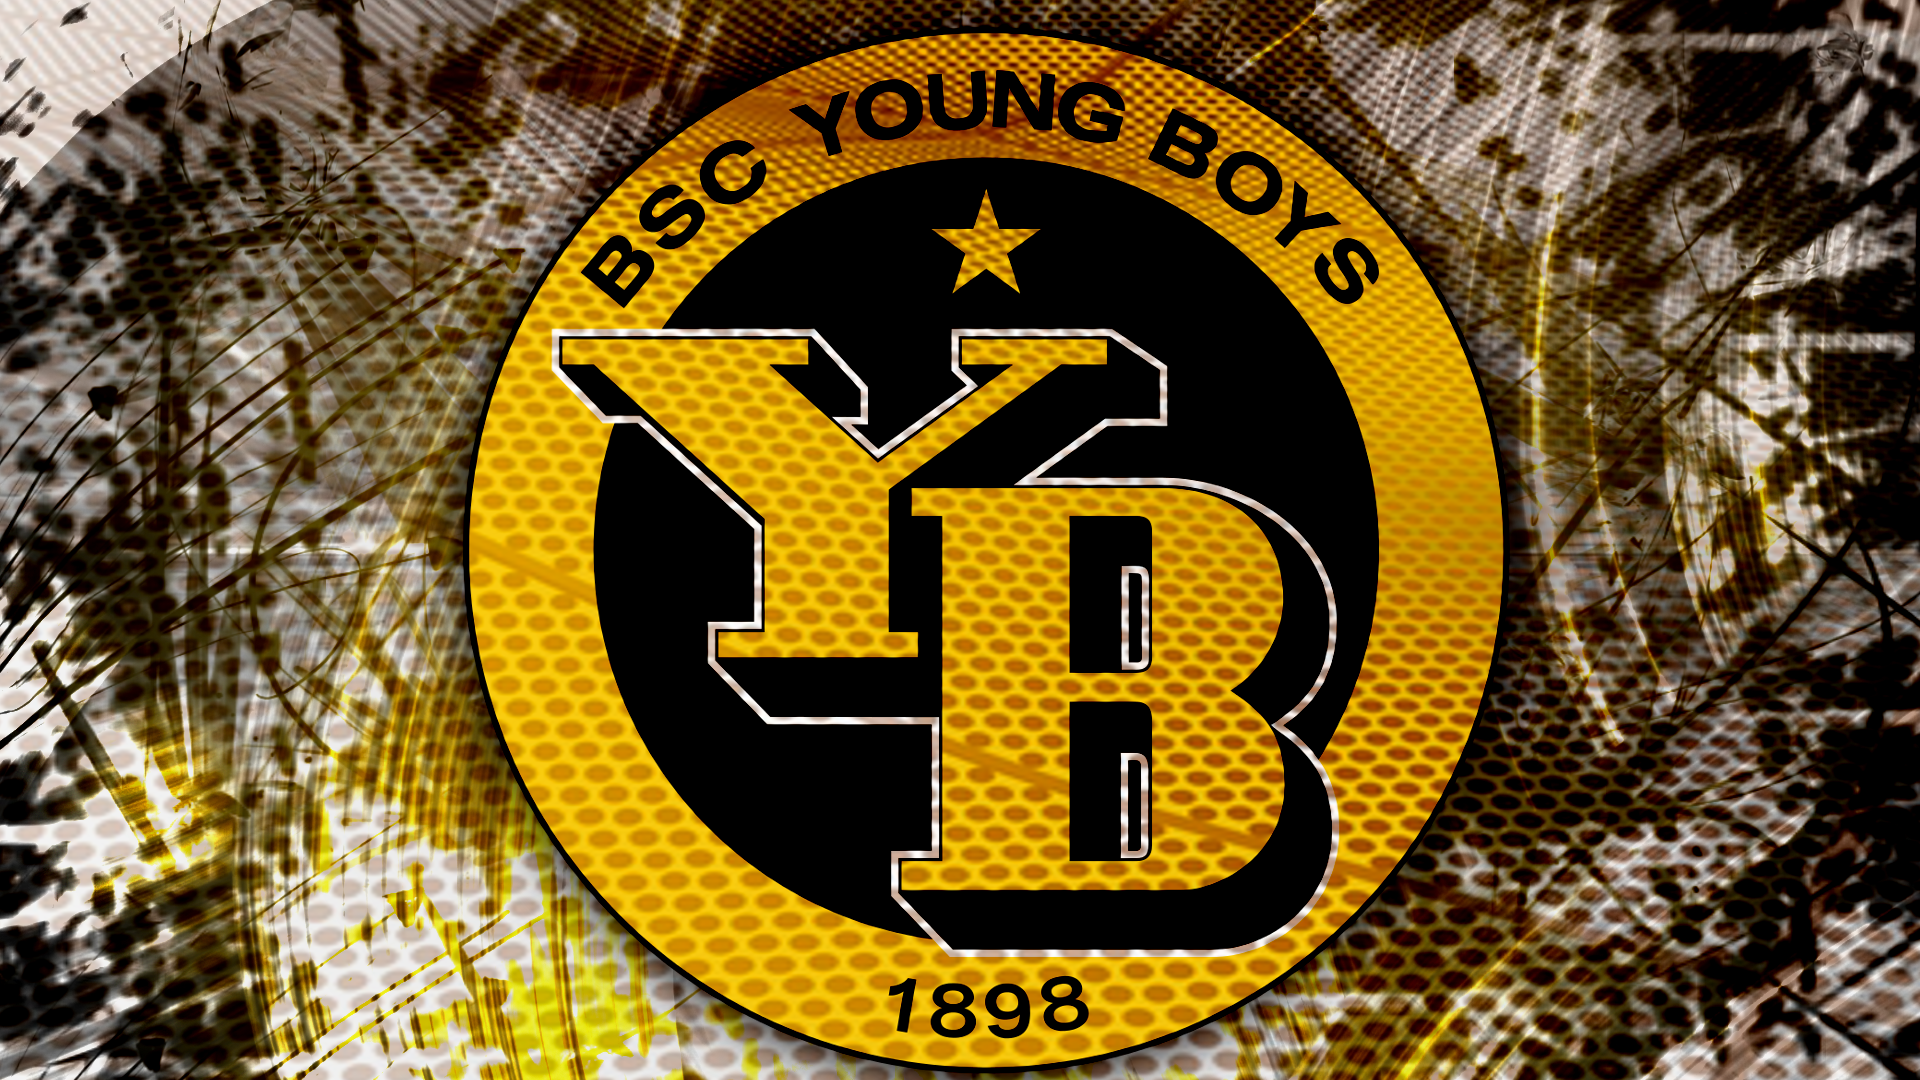 Bsc Young Boys Wallpaper X